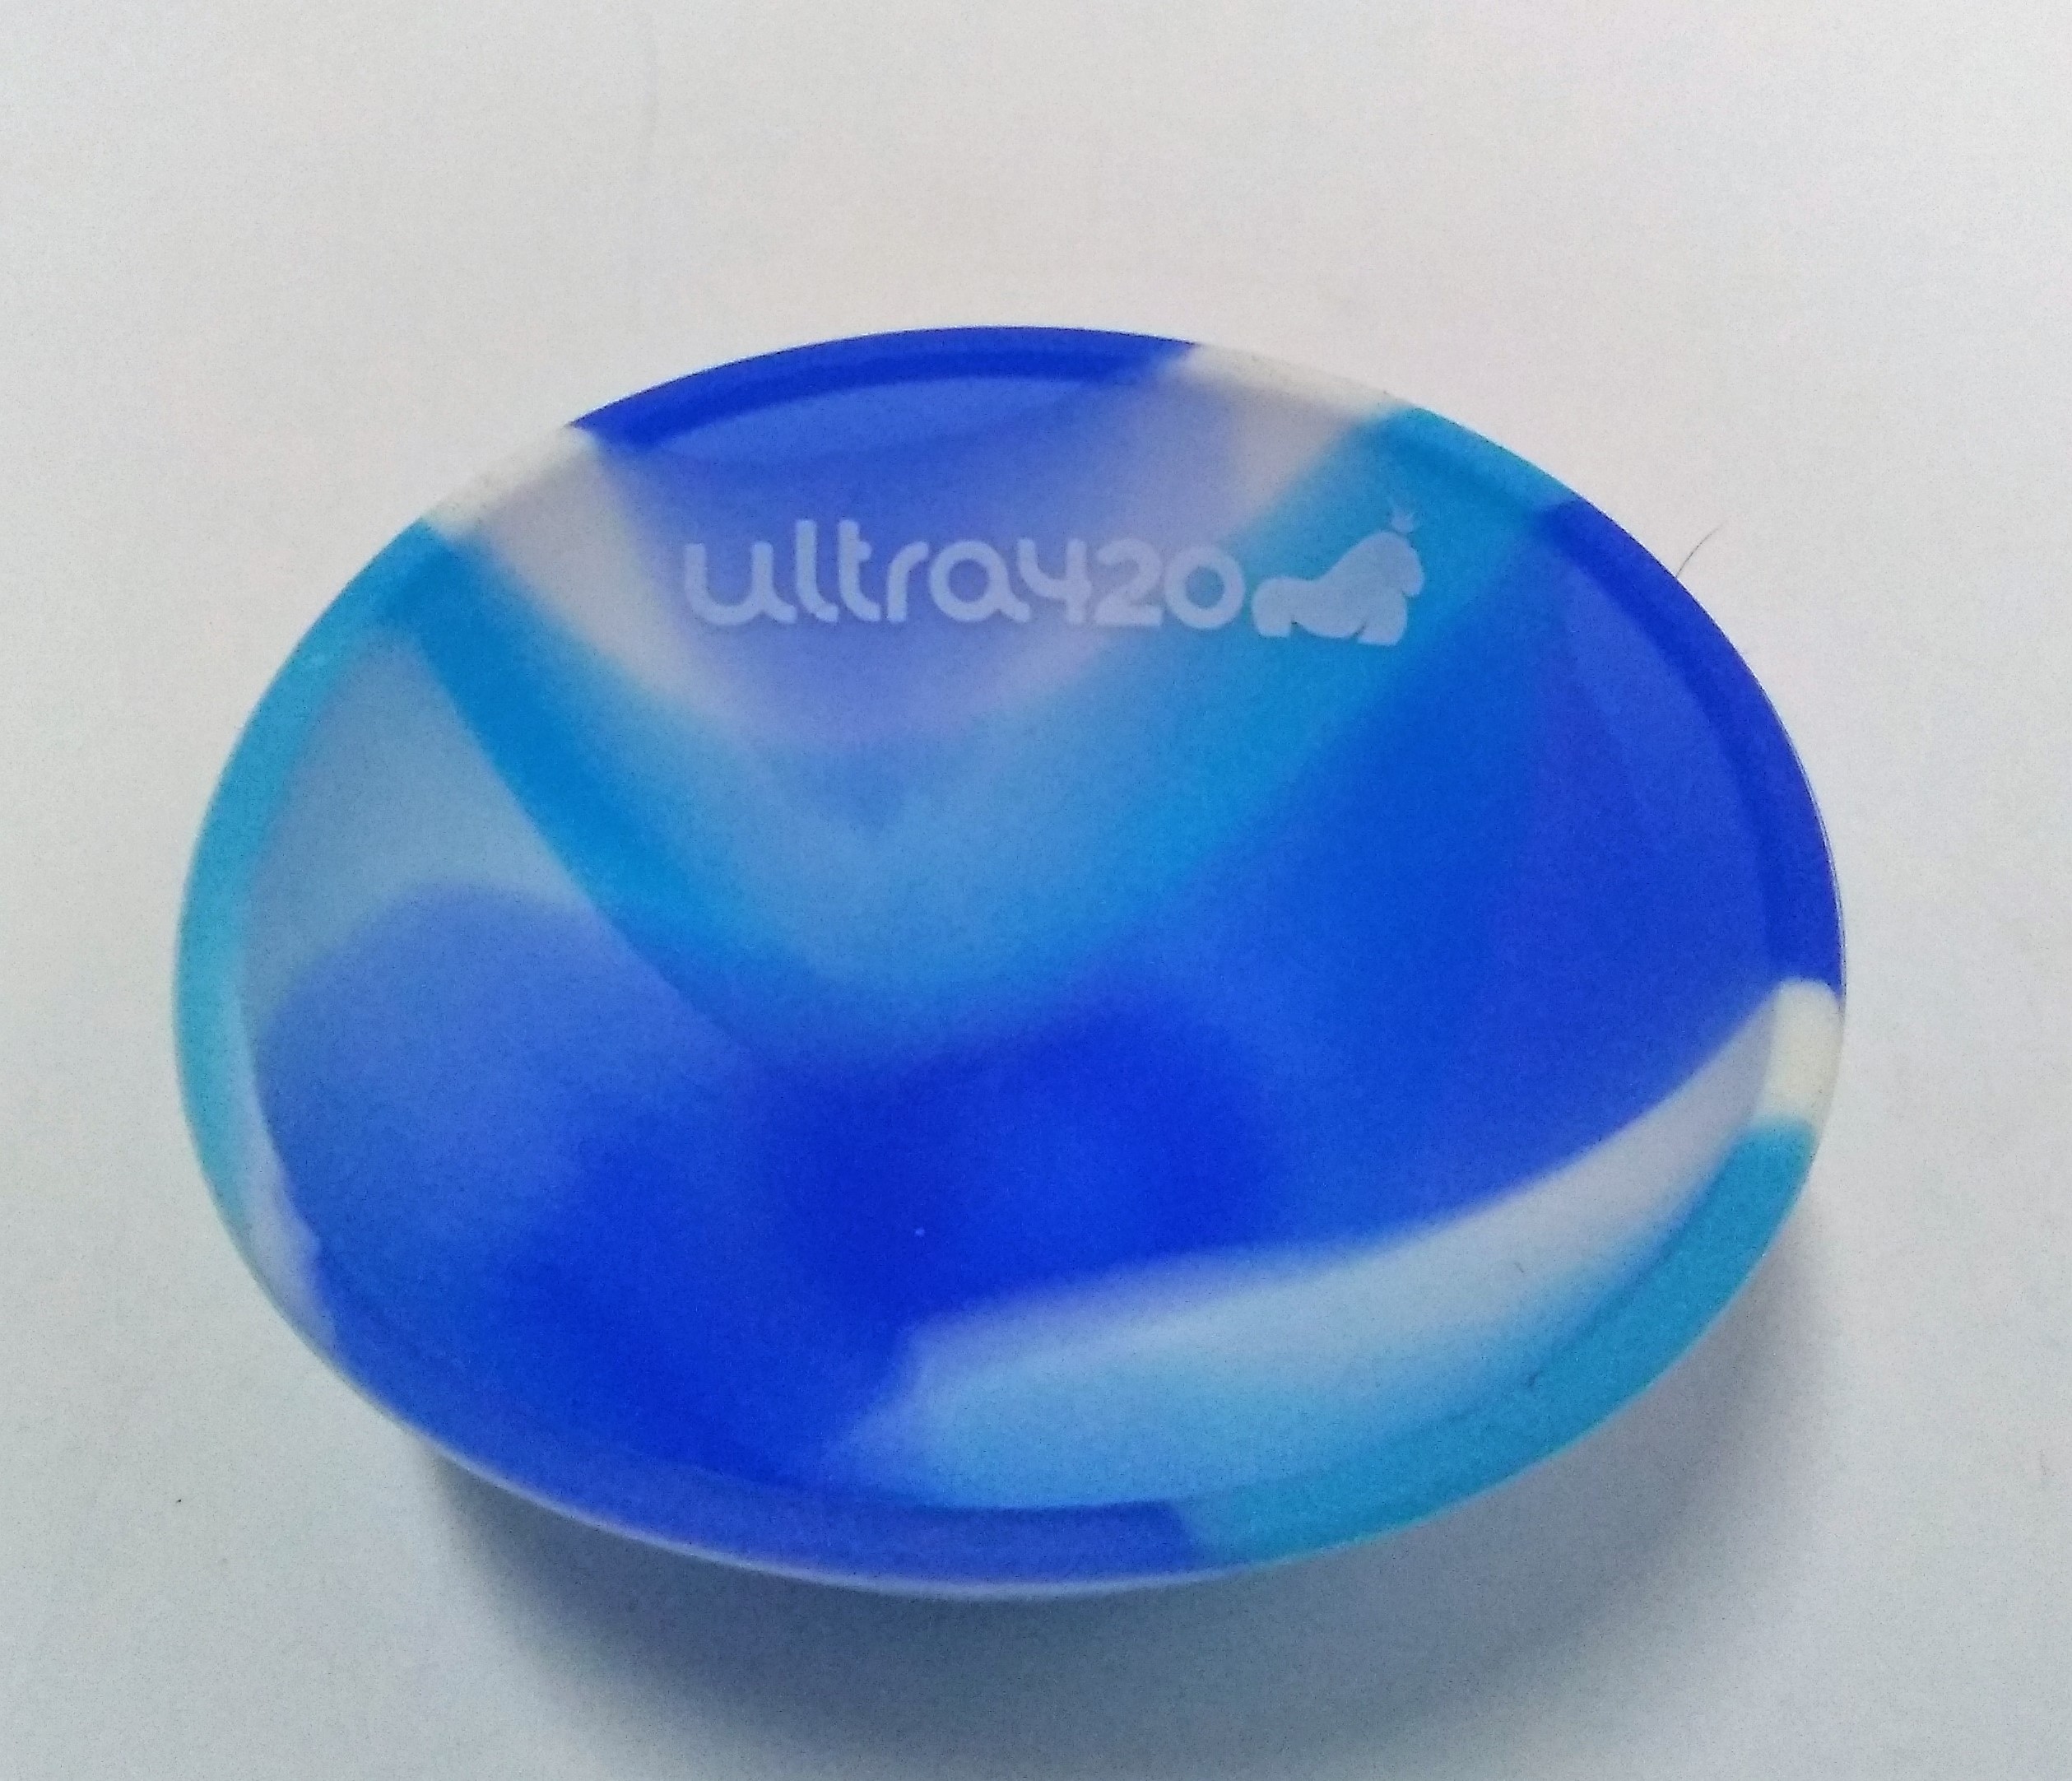 Cuia de Silicone-Ultra420 Azul